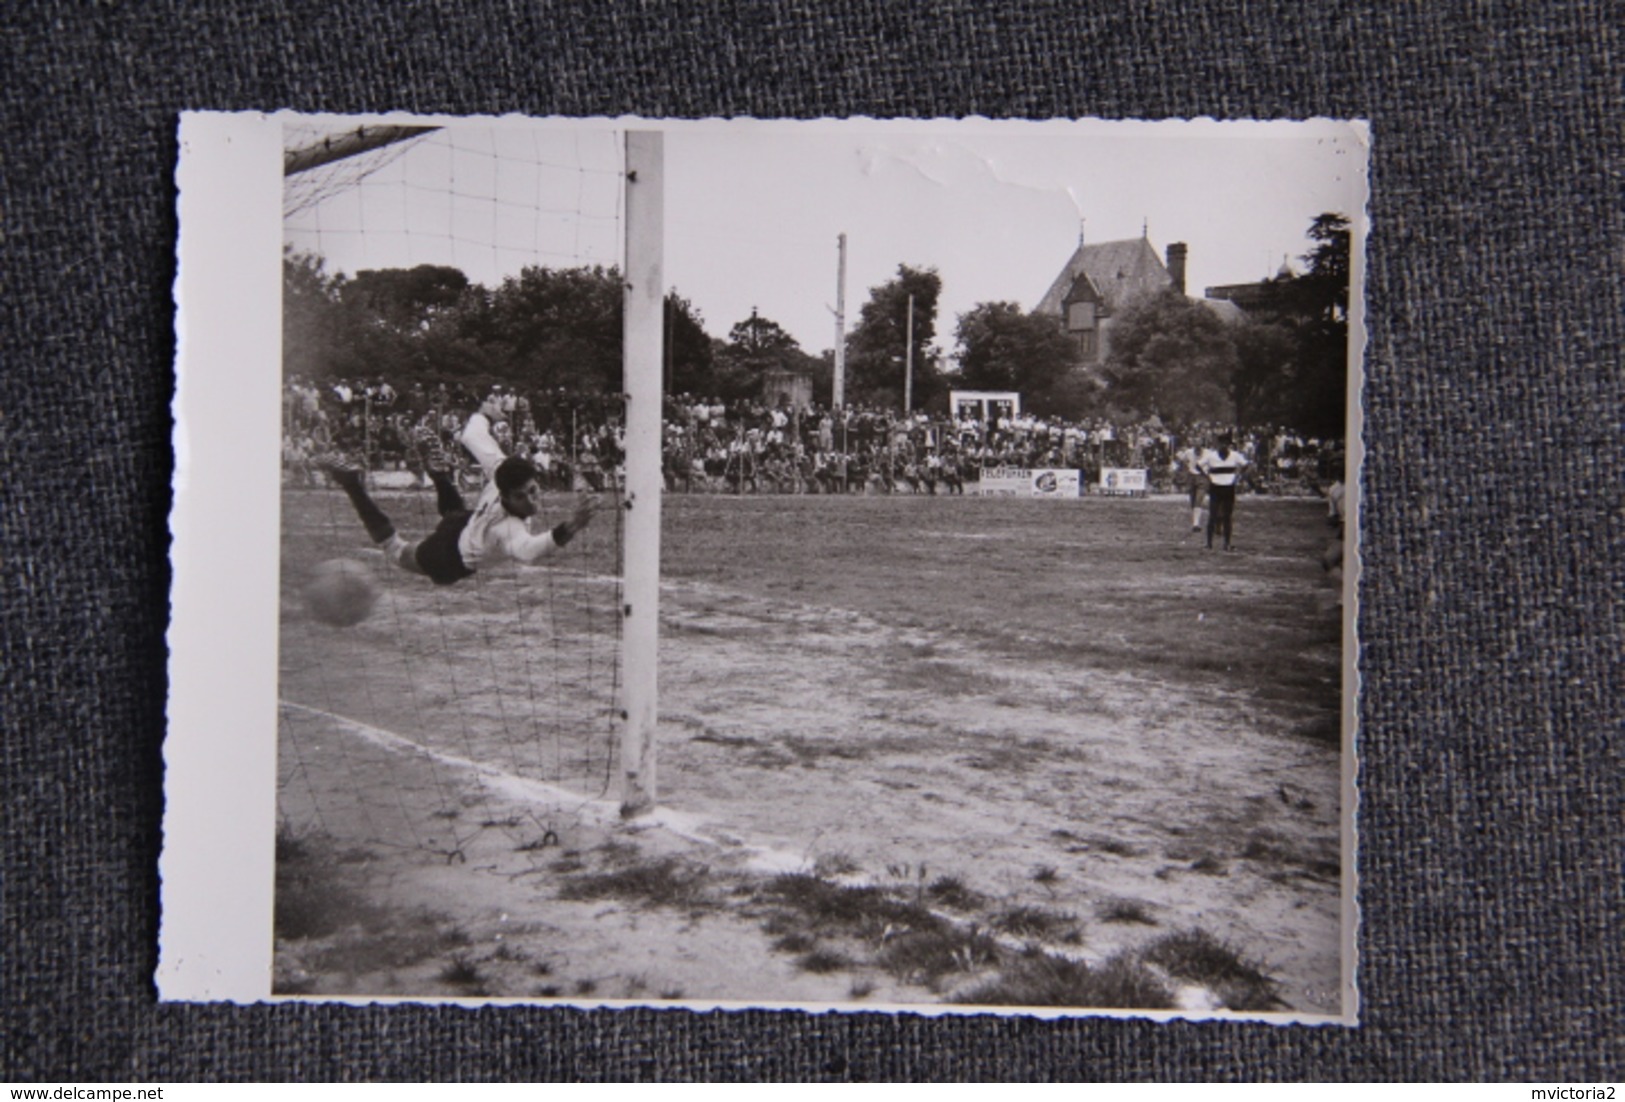 FOOTBALL à AGDE, Année 60 : 4 Photographies. - Sport